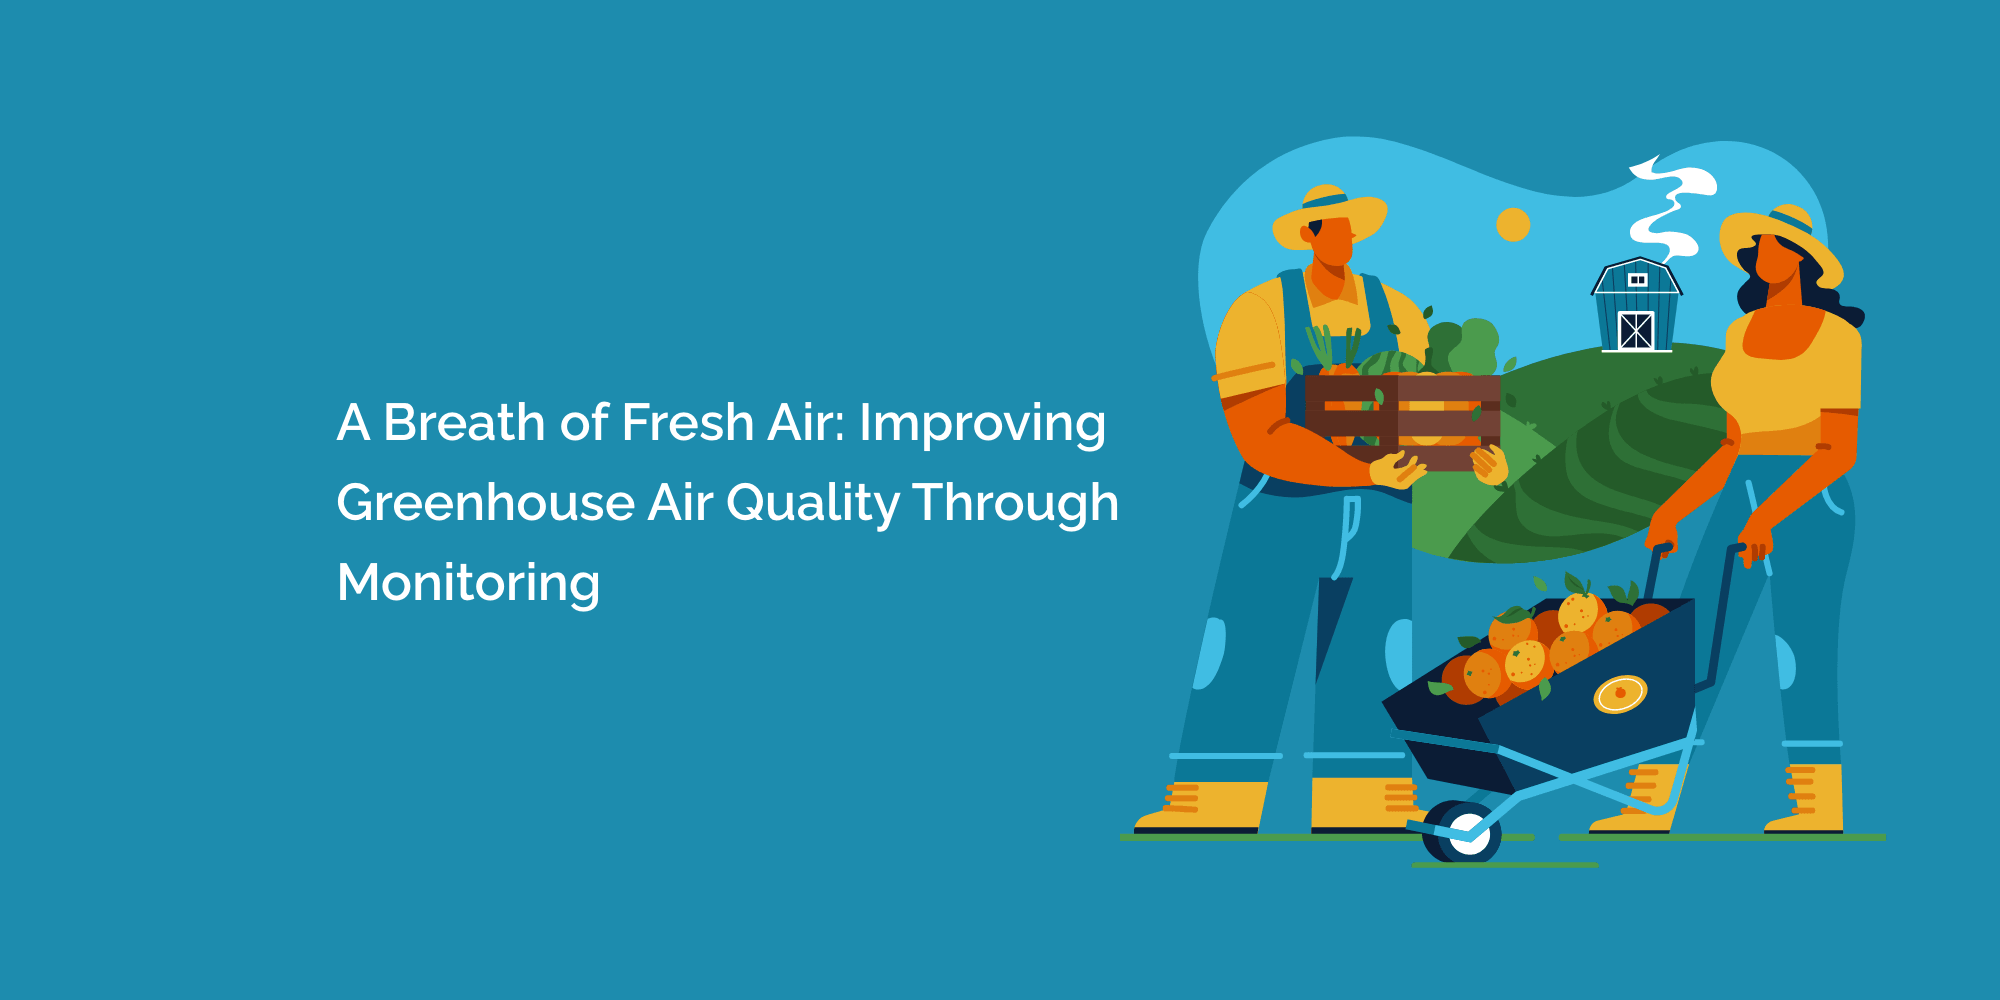 A Breath of Fresh Air: Improving Greenhouse Air Quality Through Monitoring